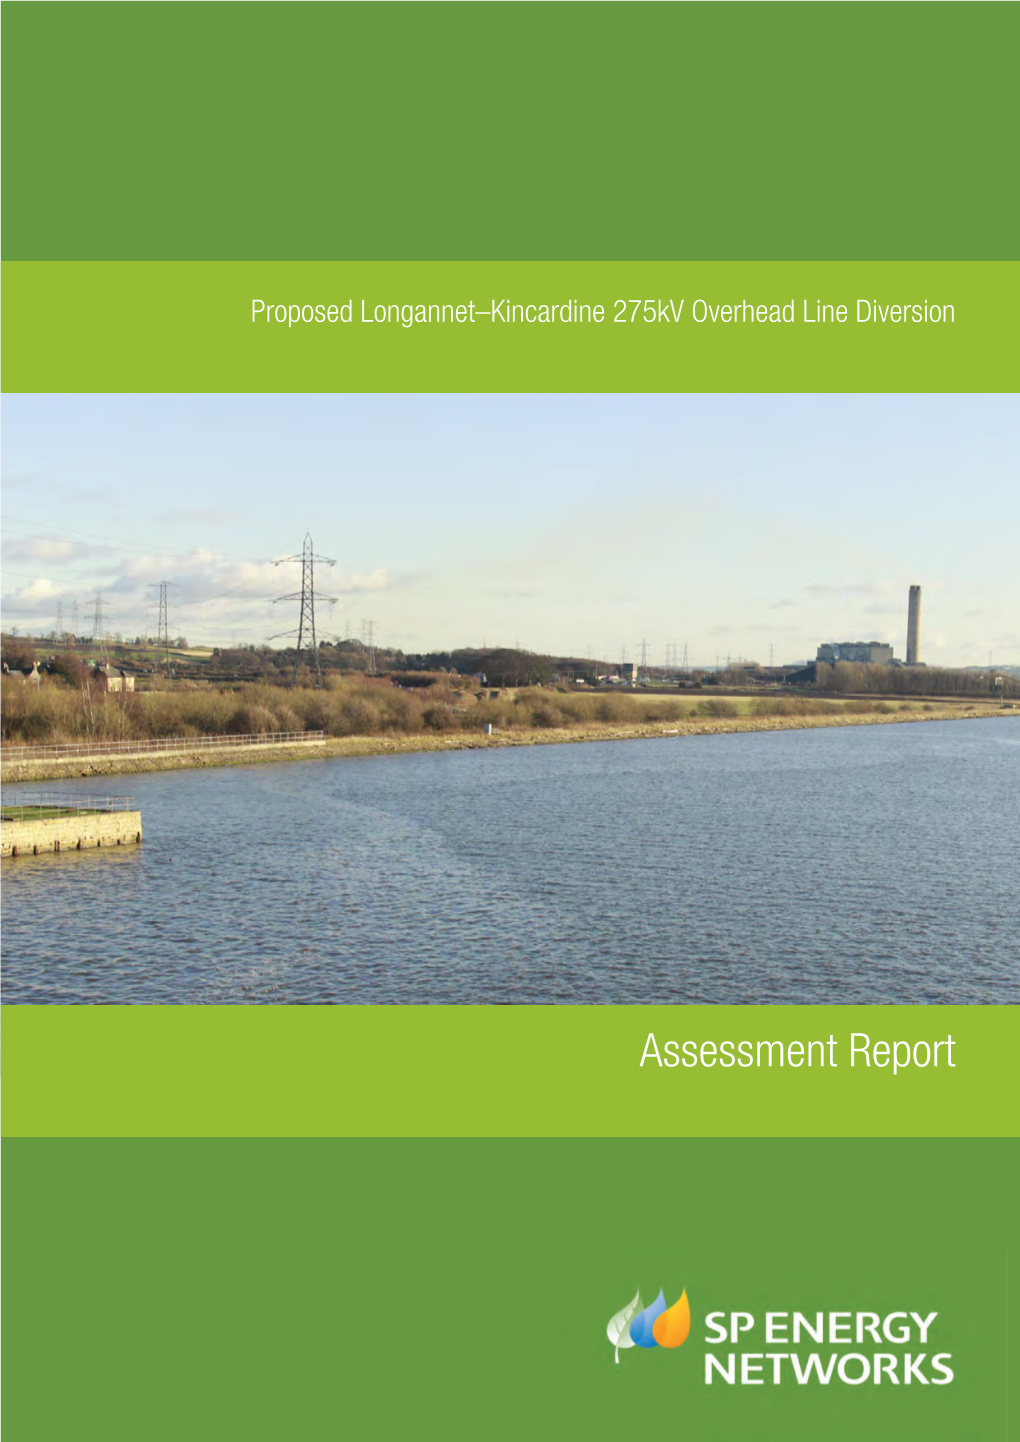 Assessment Report Assessment Report Proposed Longannet – Kincardine 275Kv Overhead Line Diversion March 2015